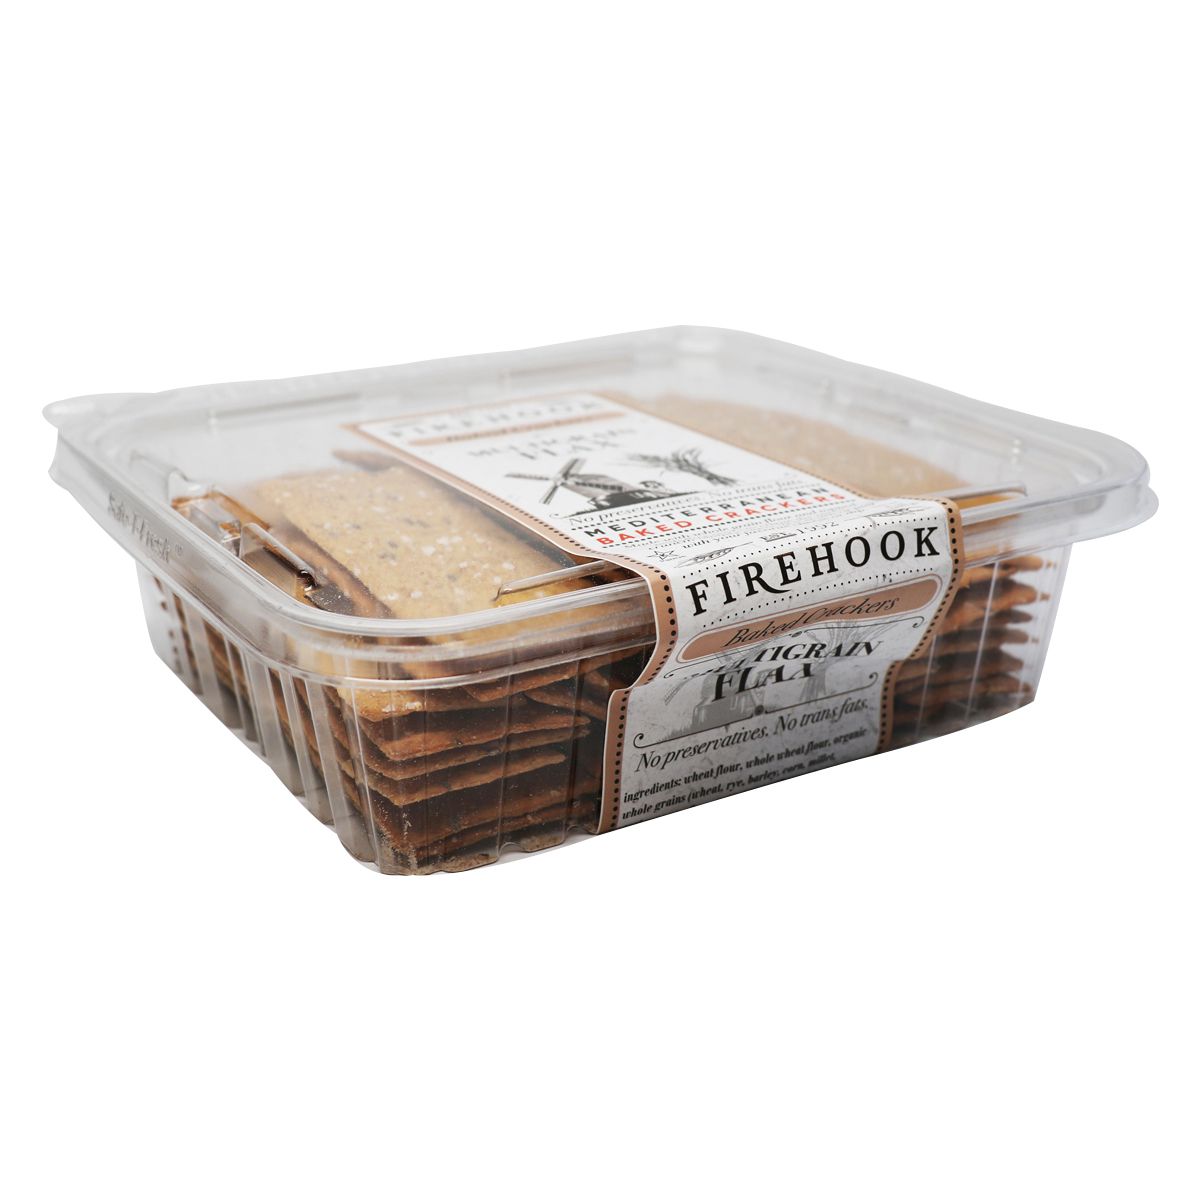 Firehook Baked Crackers Multigrain Flax Crackers 5.5 Oz